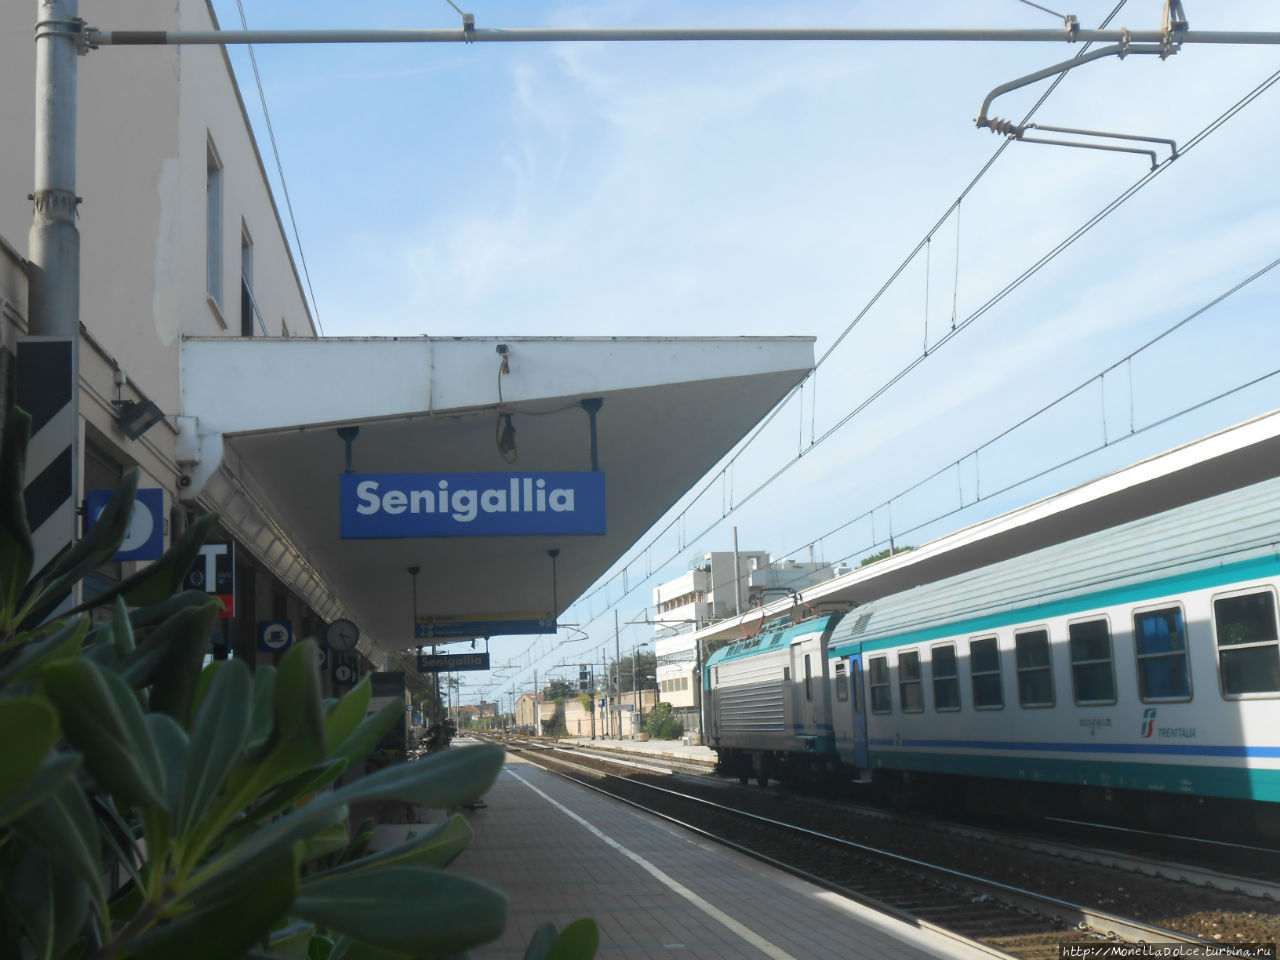 Сенигаллия — провинция Анкона (2014) Сенигаллия, Италия